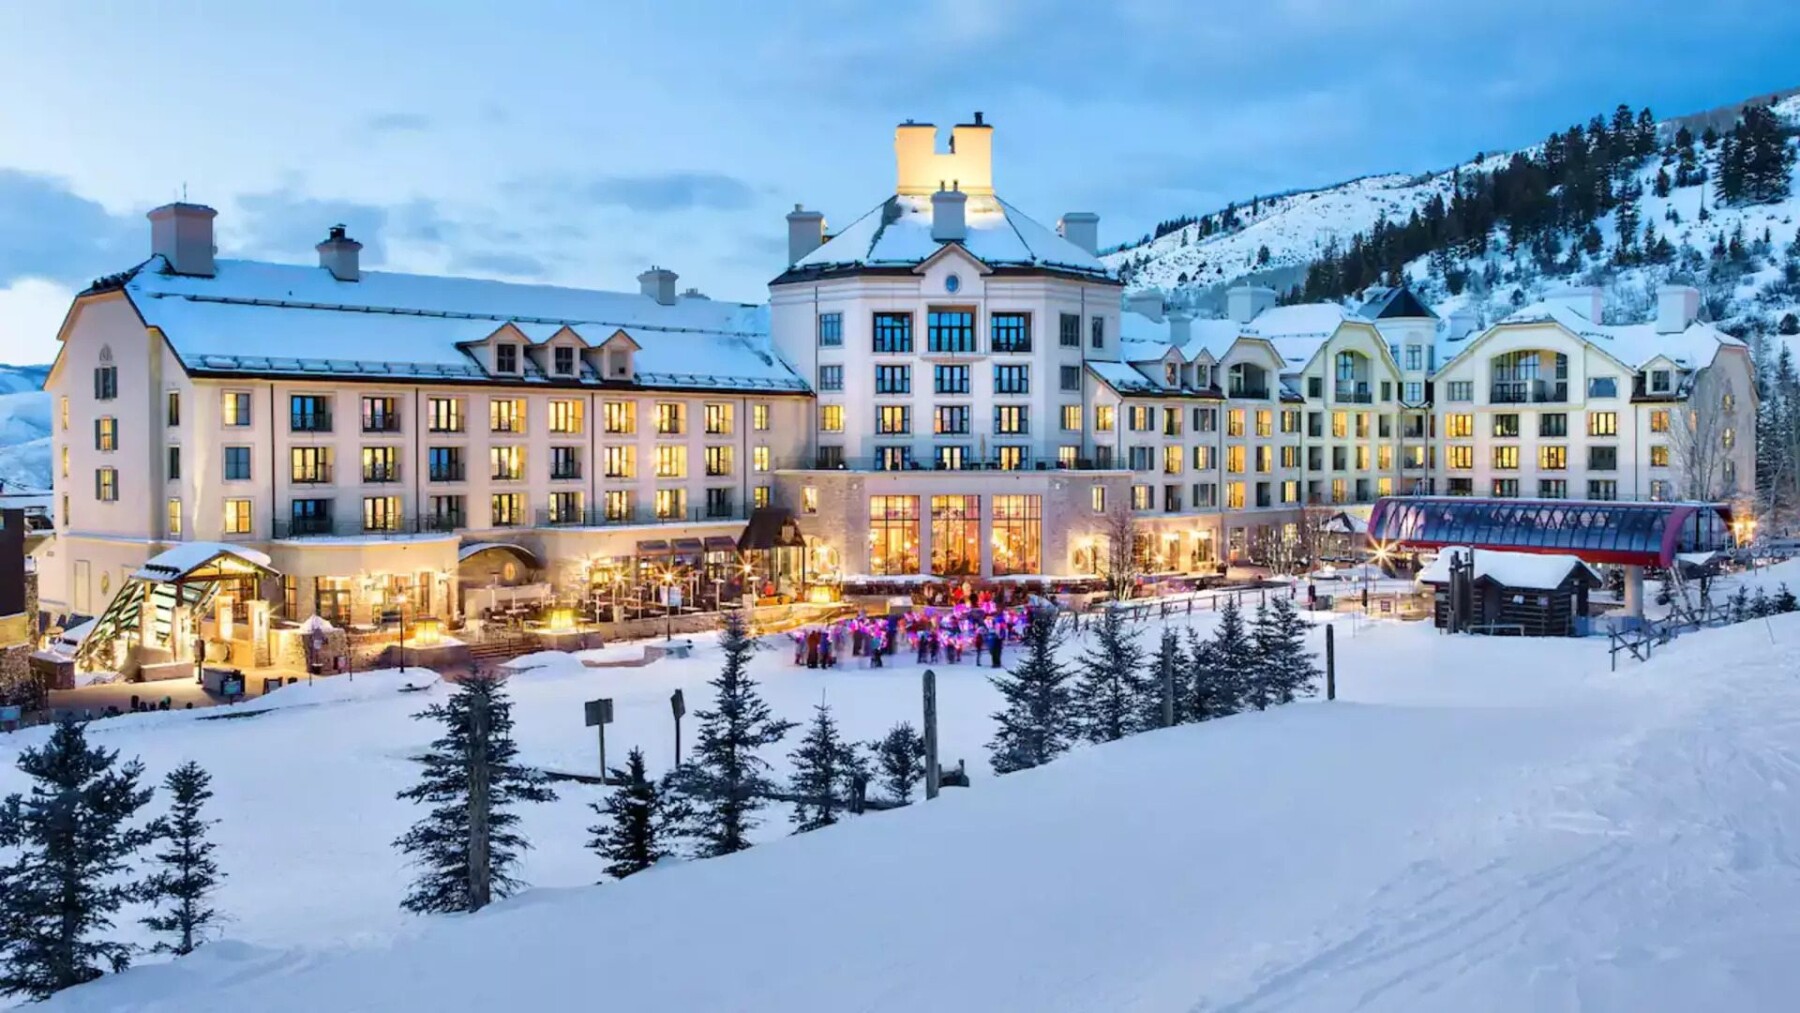 Hotel Park Hyatt, a luxury ski hotel in the USA